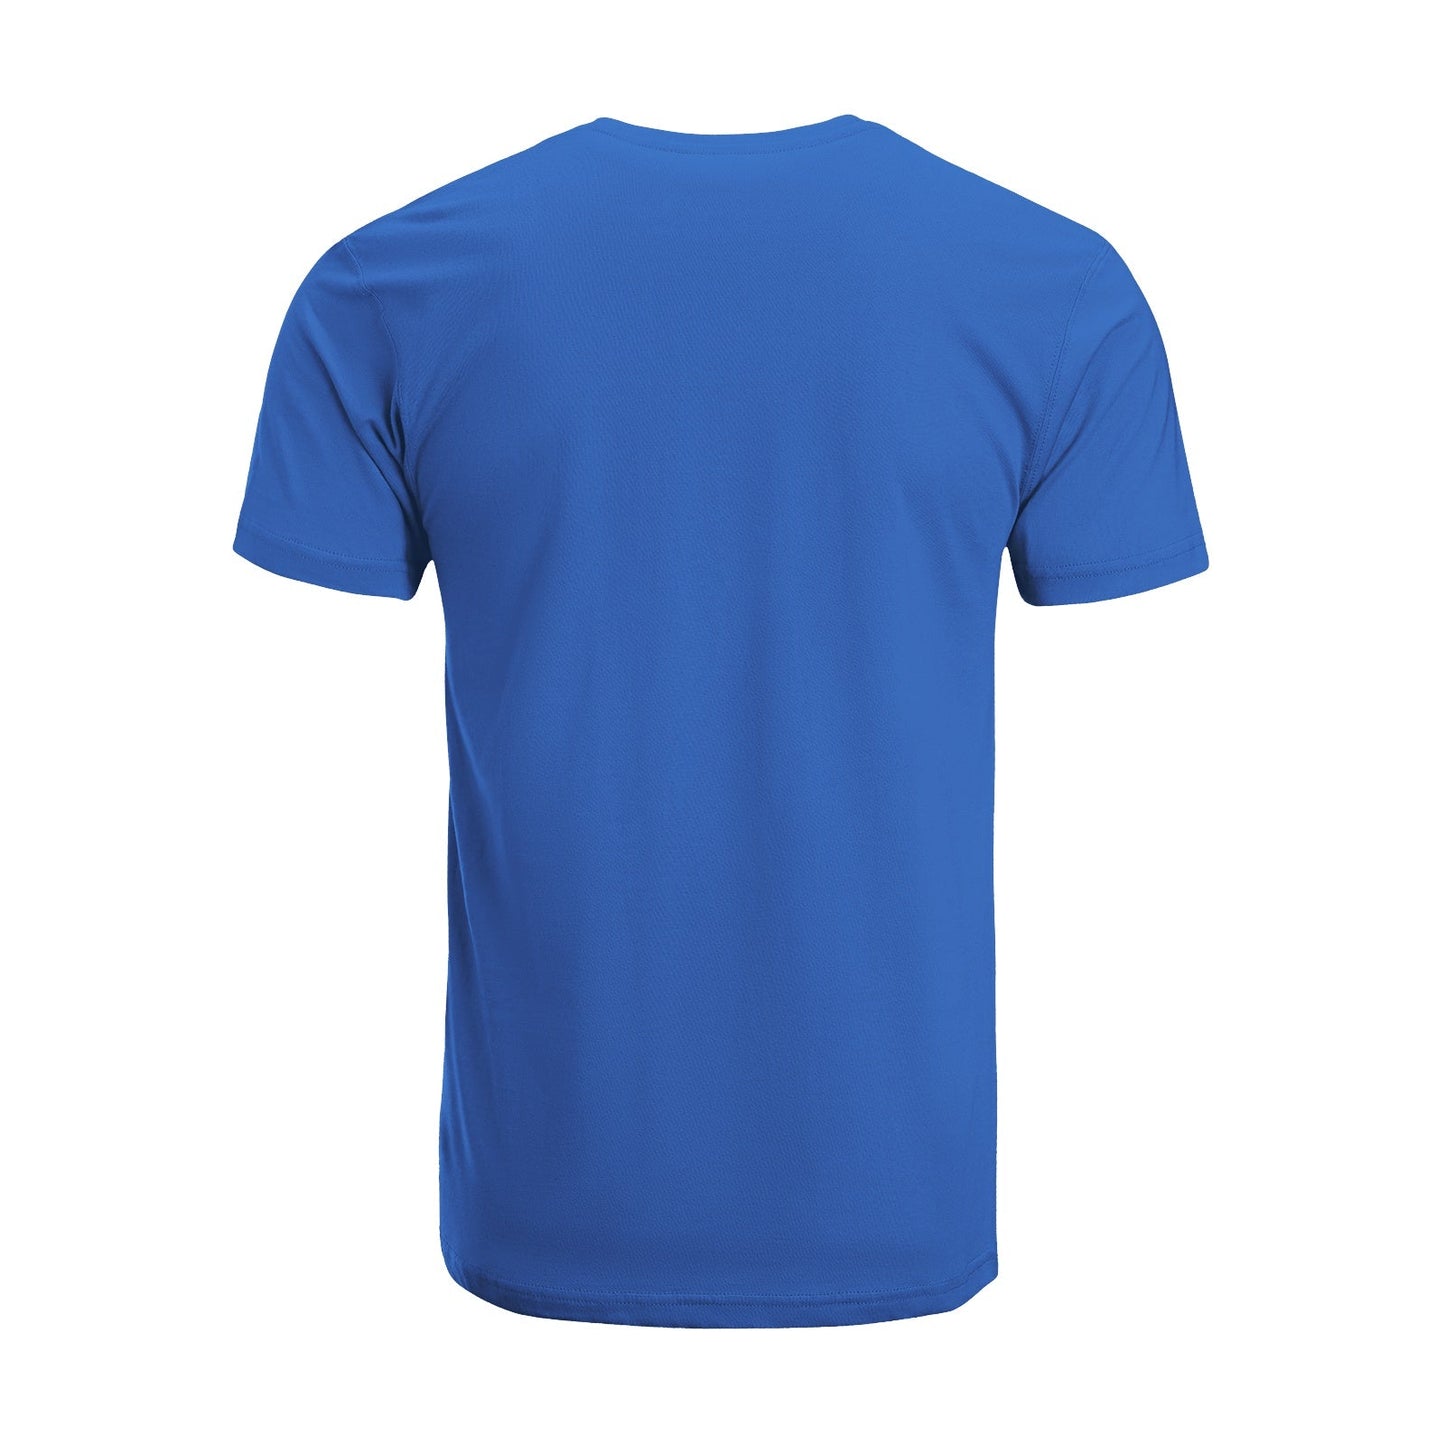 Unisex Short Sleeve Crew Neck Cotton Jersey T-Shirt MOM 28